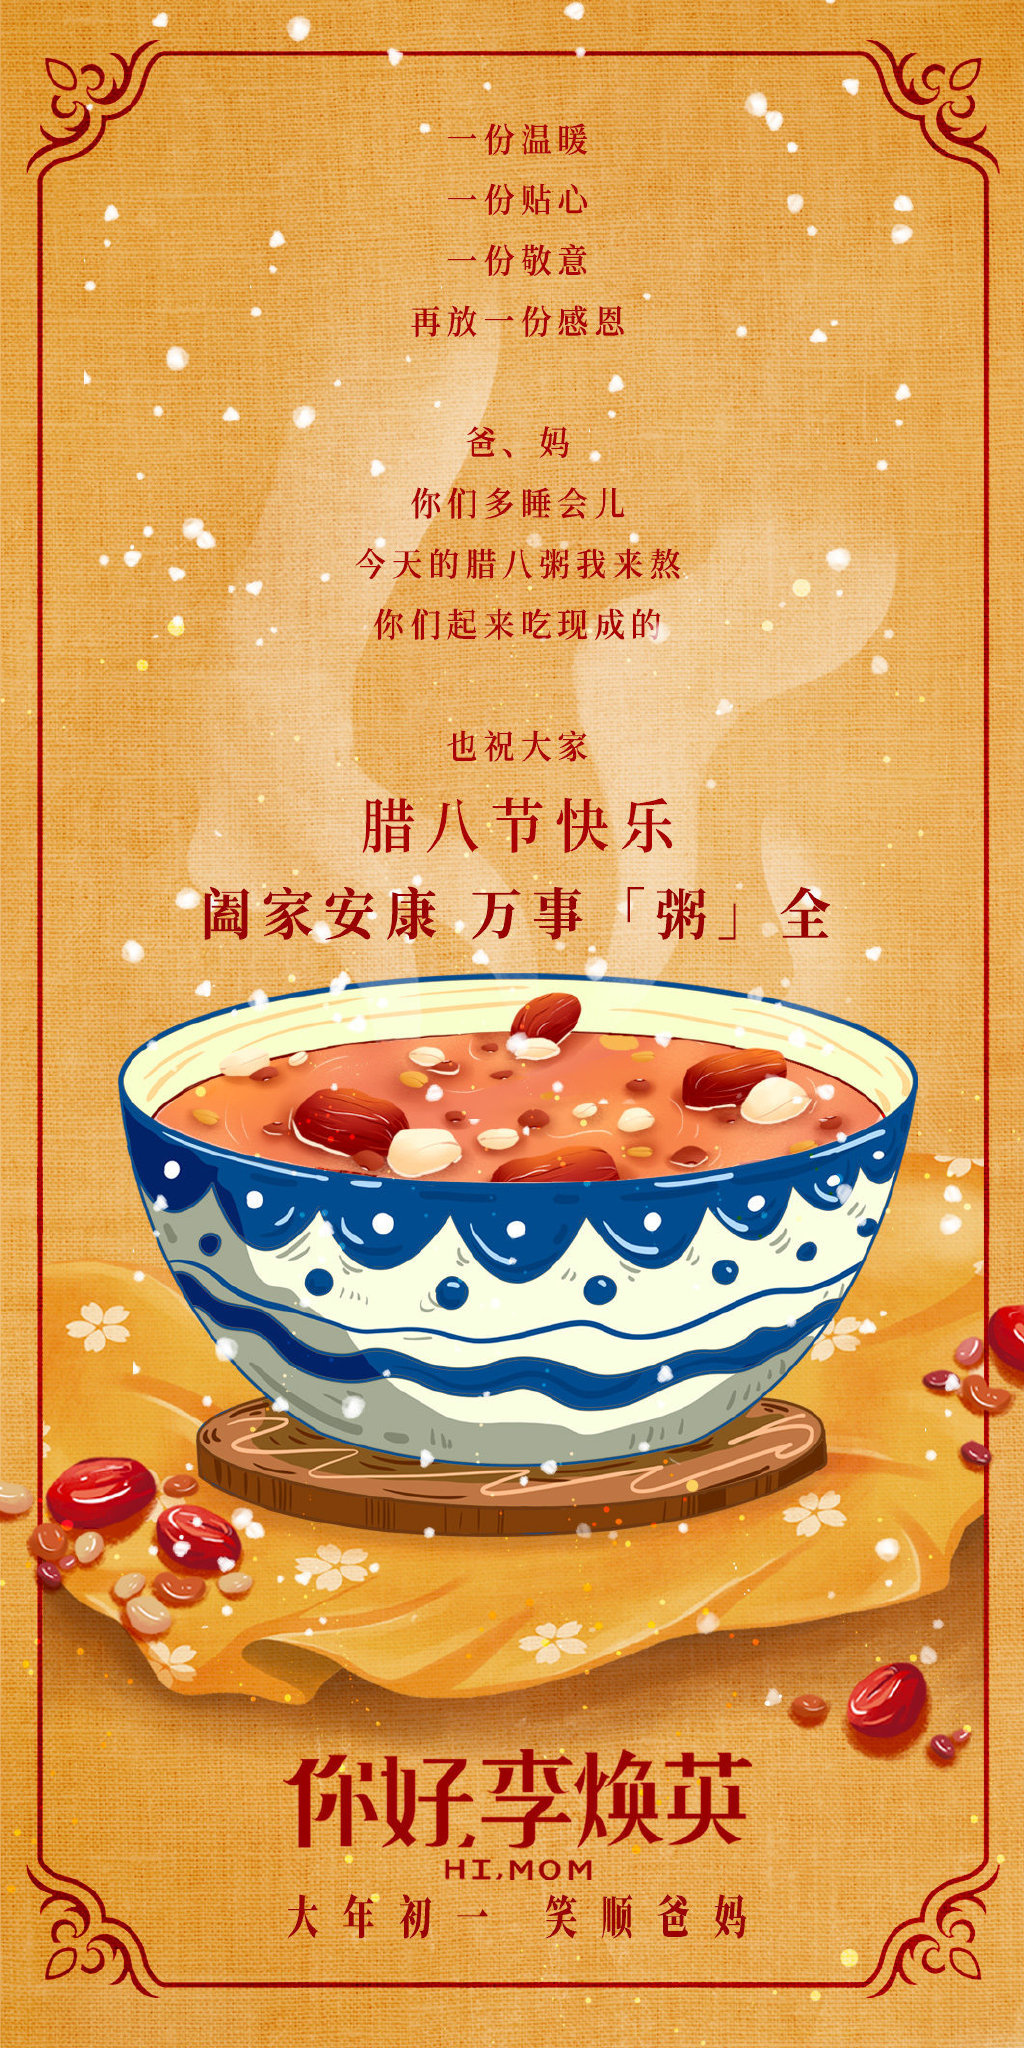 Ni Hao, Li Huan Ying download the new version for apple